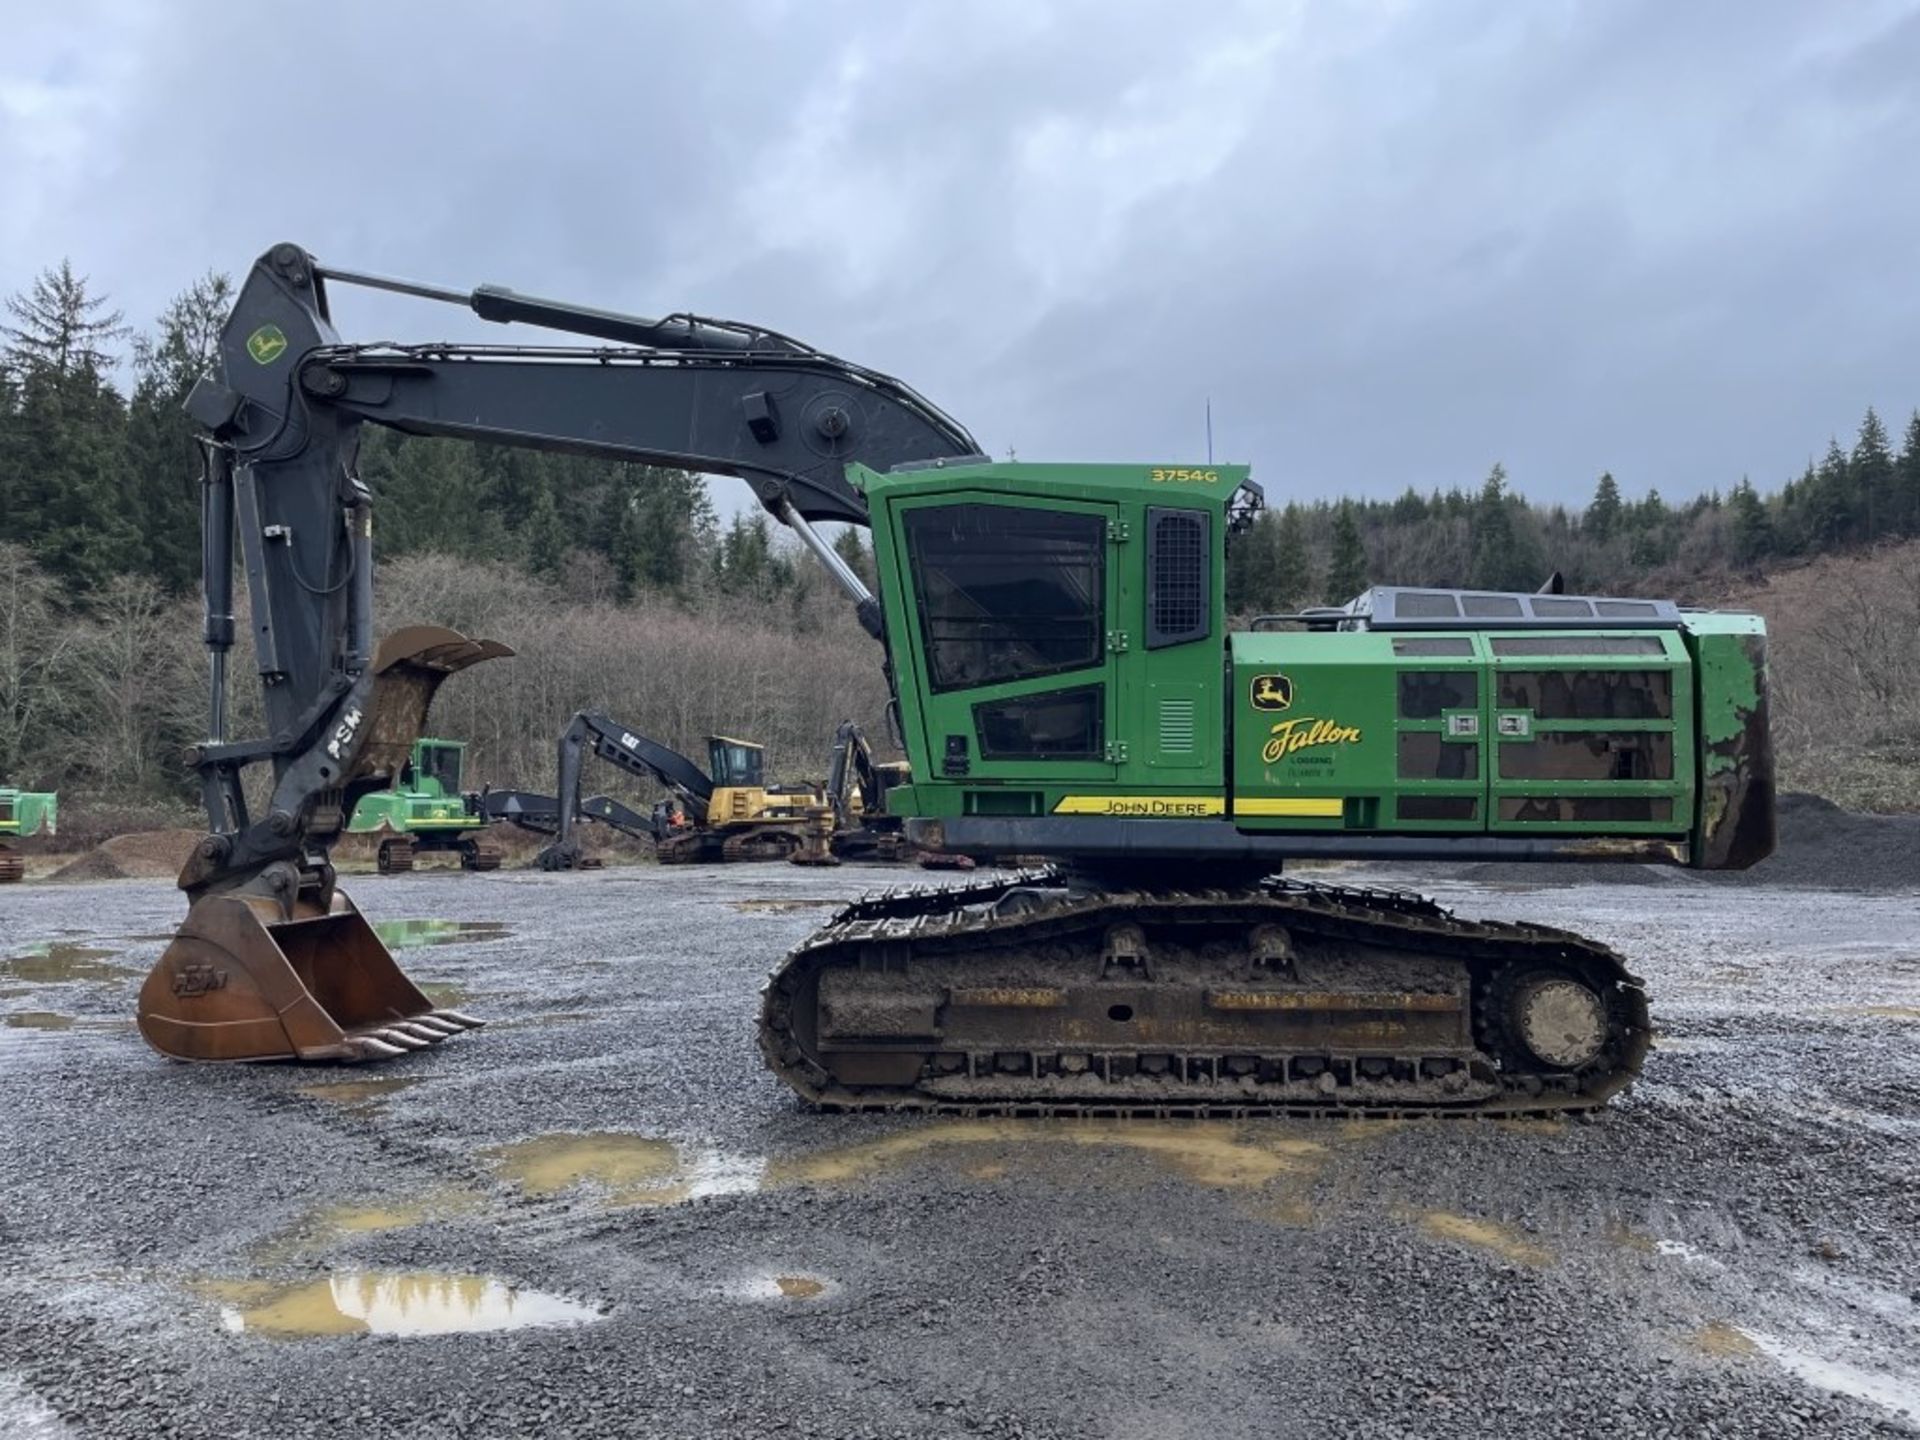 2017 John Deere 3754G Hydraulic Excavator - Image 2 of 59